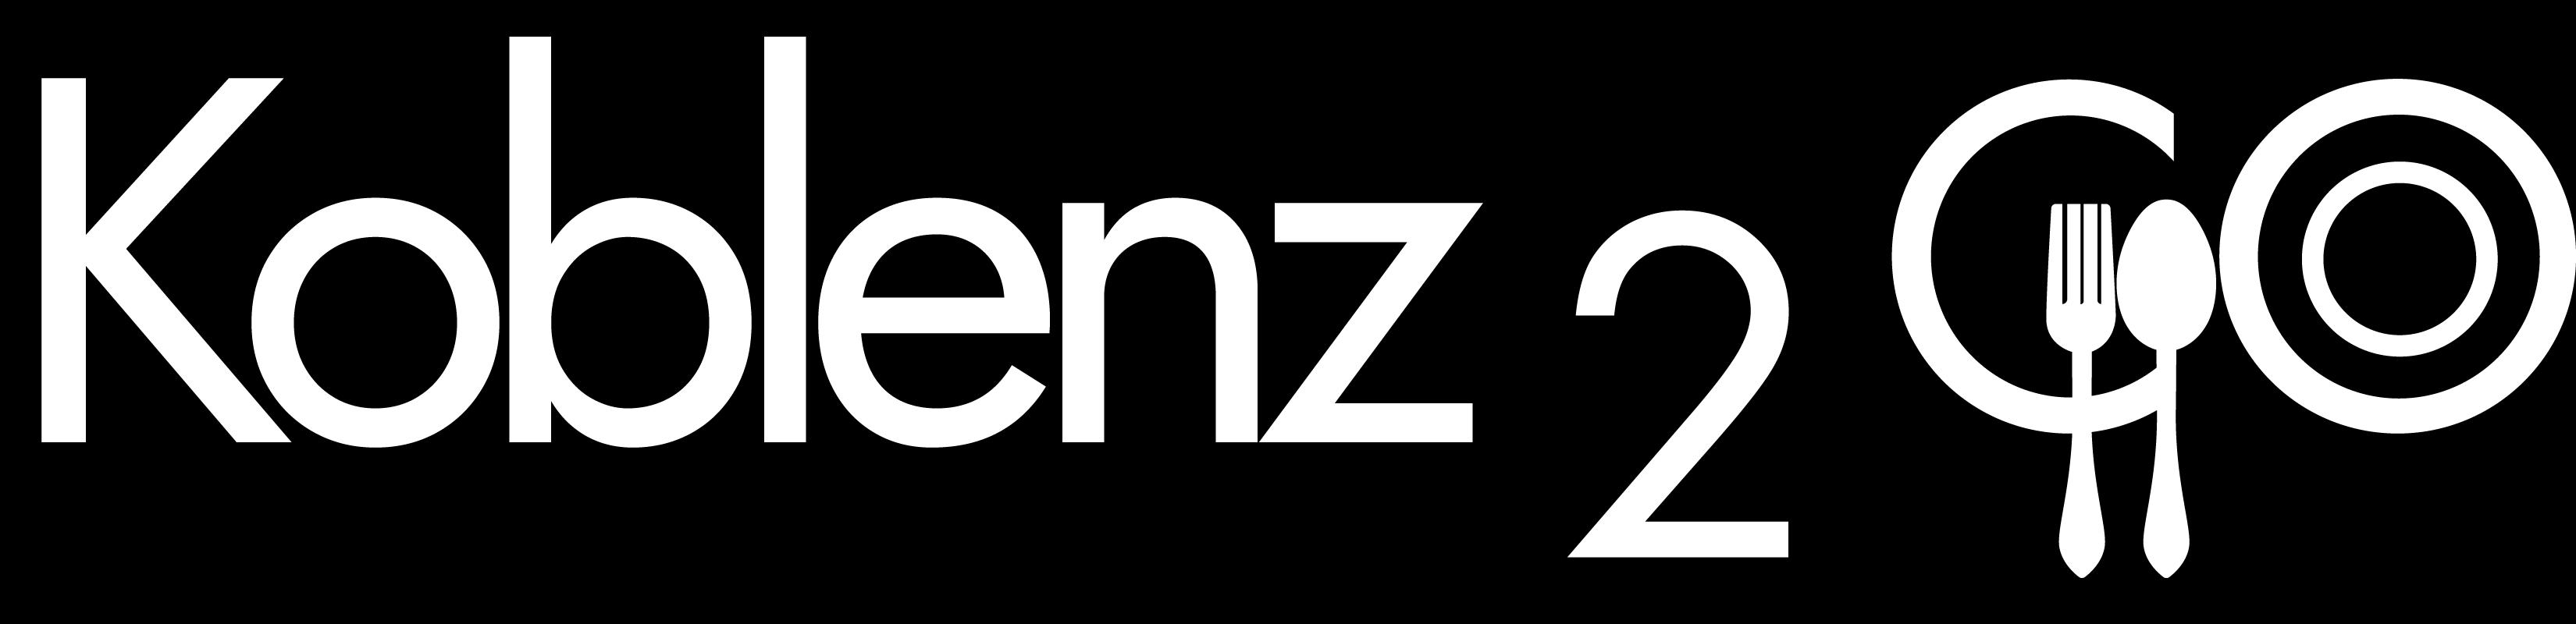 Logo Koblenz2go